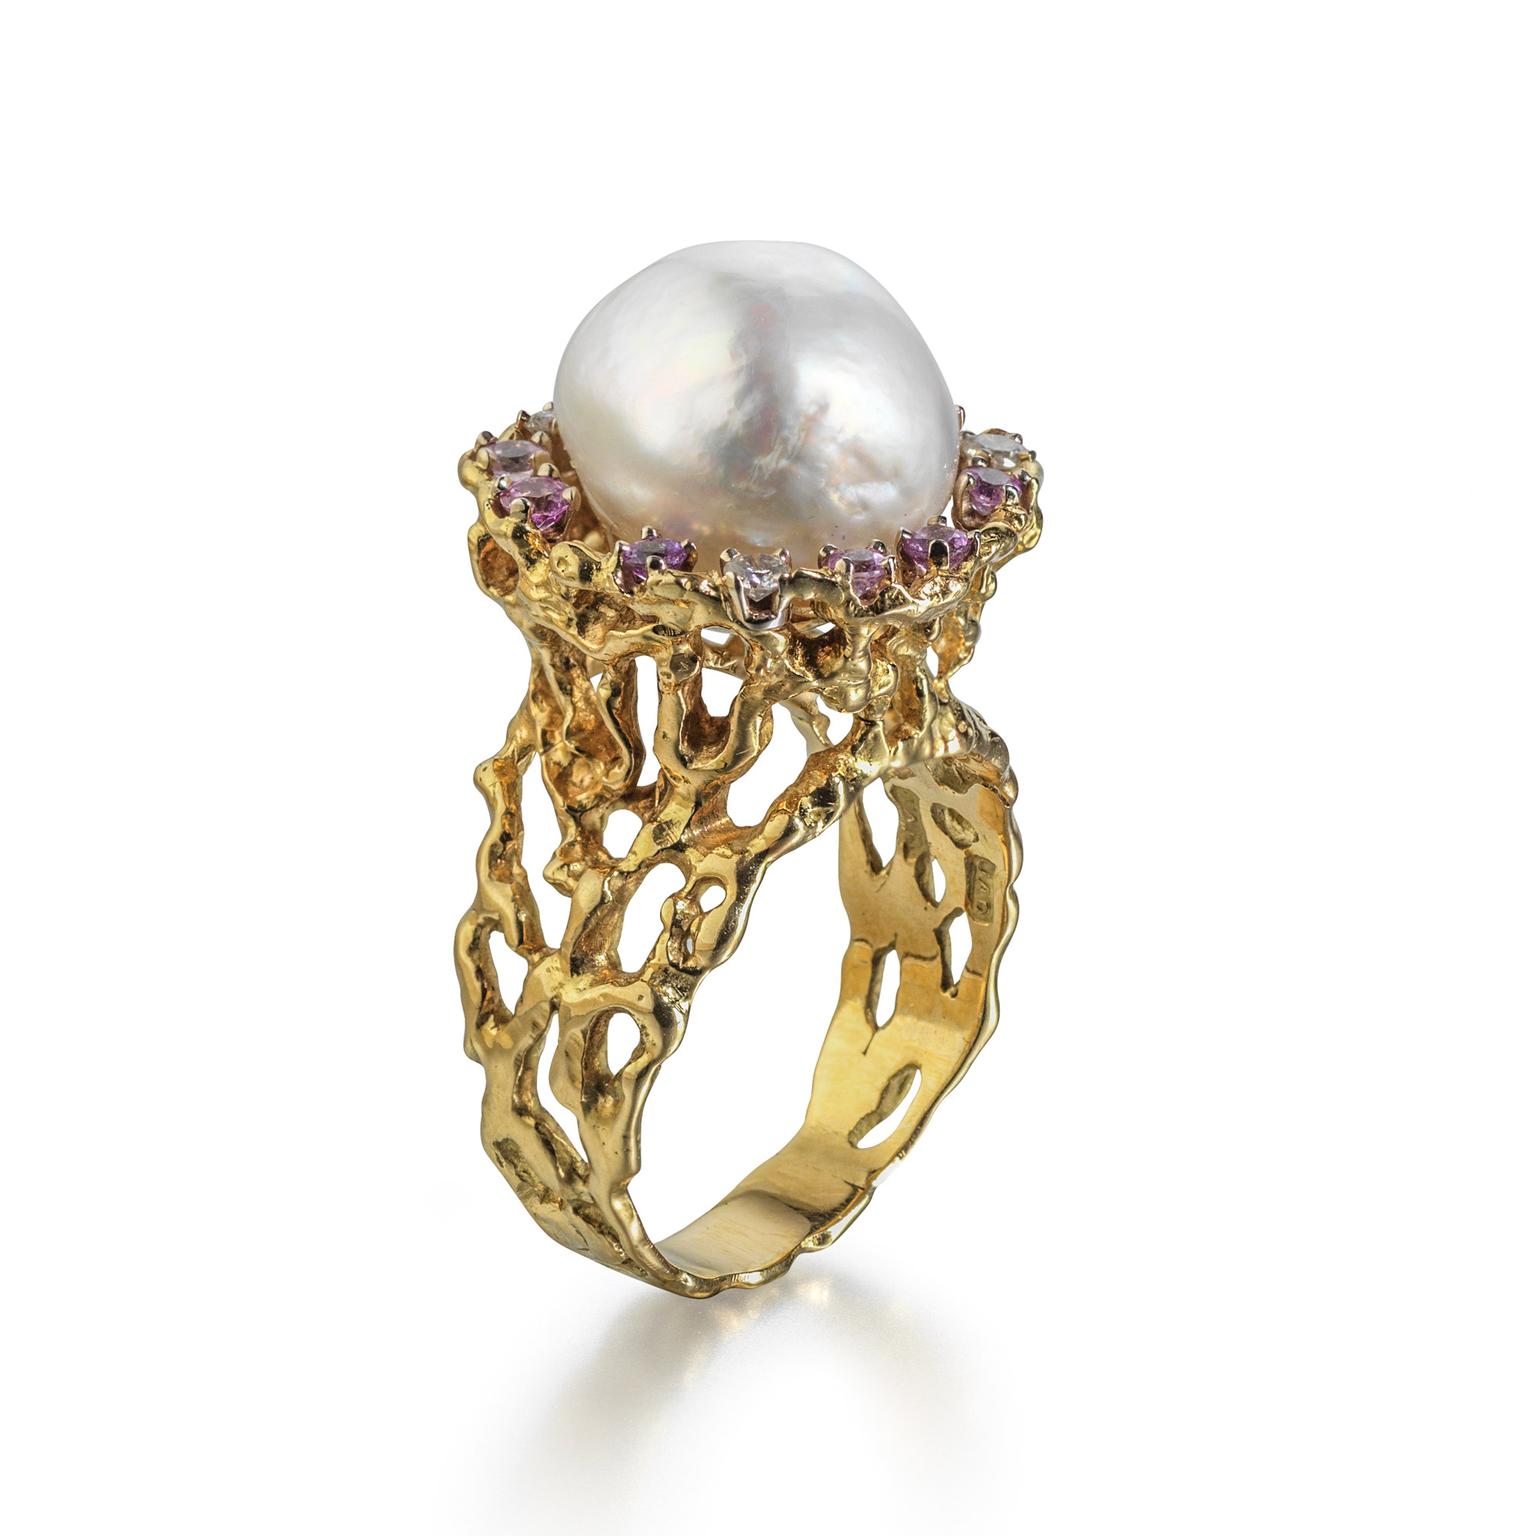 John Donald baroque South Sea pearl ring